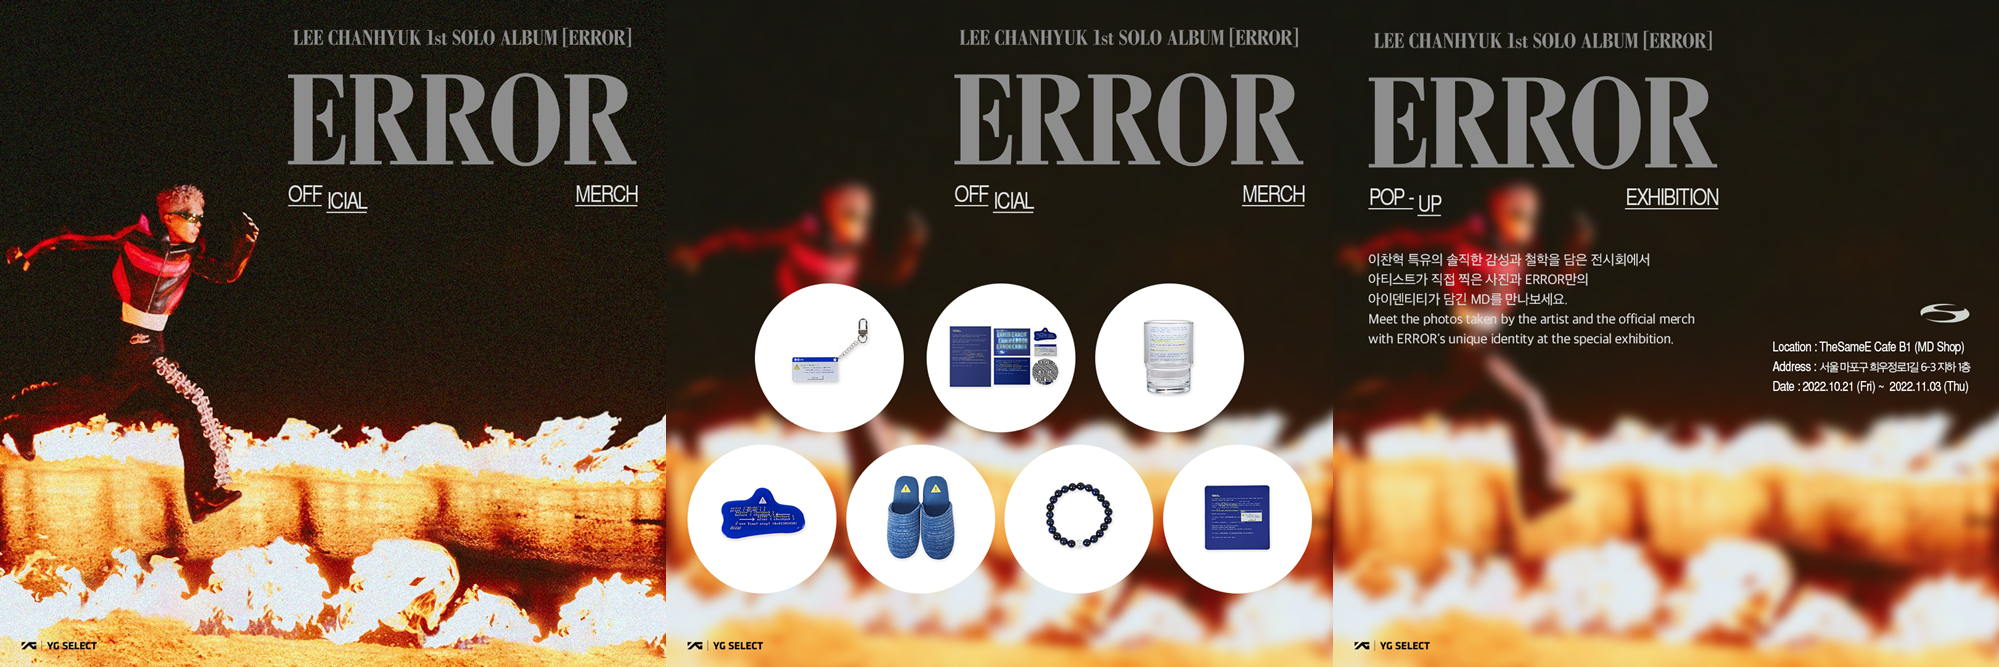 1st SOLO ALBUM ERROR 공식 MD 릴리즈와 전시회 소식.